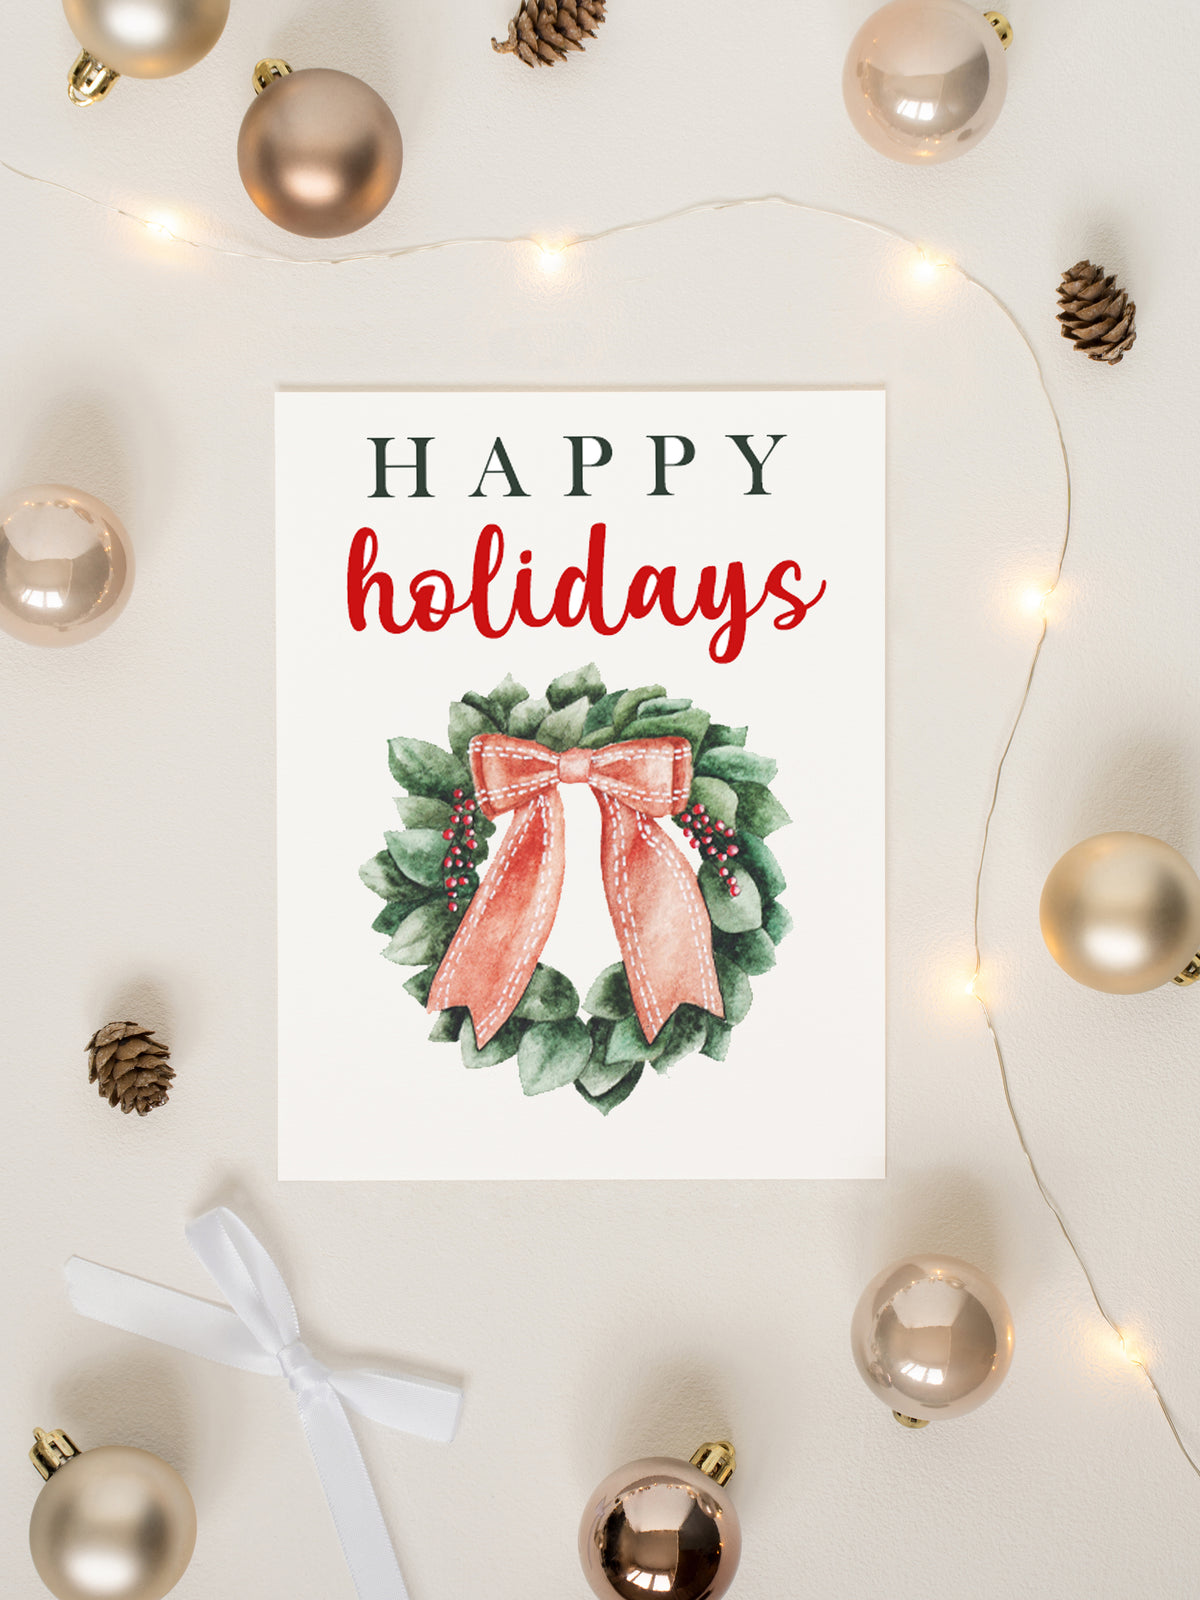 Happy Holidays Wreath Card Set,Holiday Chrismas Wreath Cards,Handmade Holiday Greeting Cards,Holiday Season Greetings Card,Made in USA